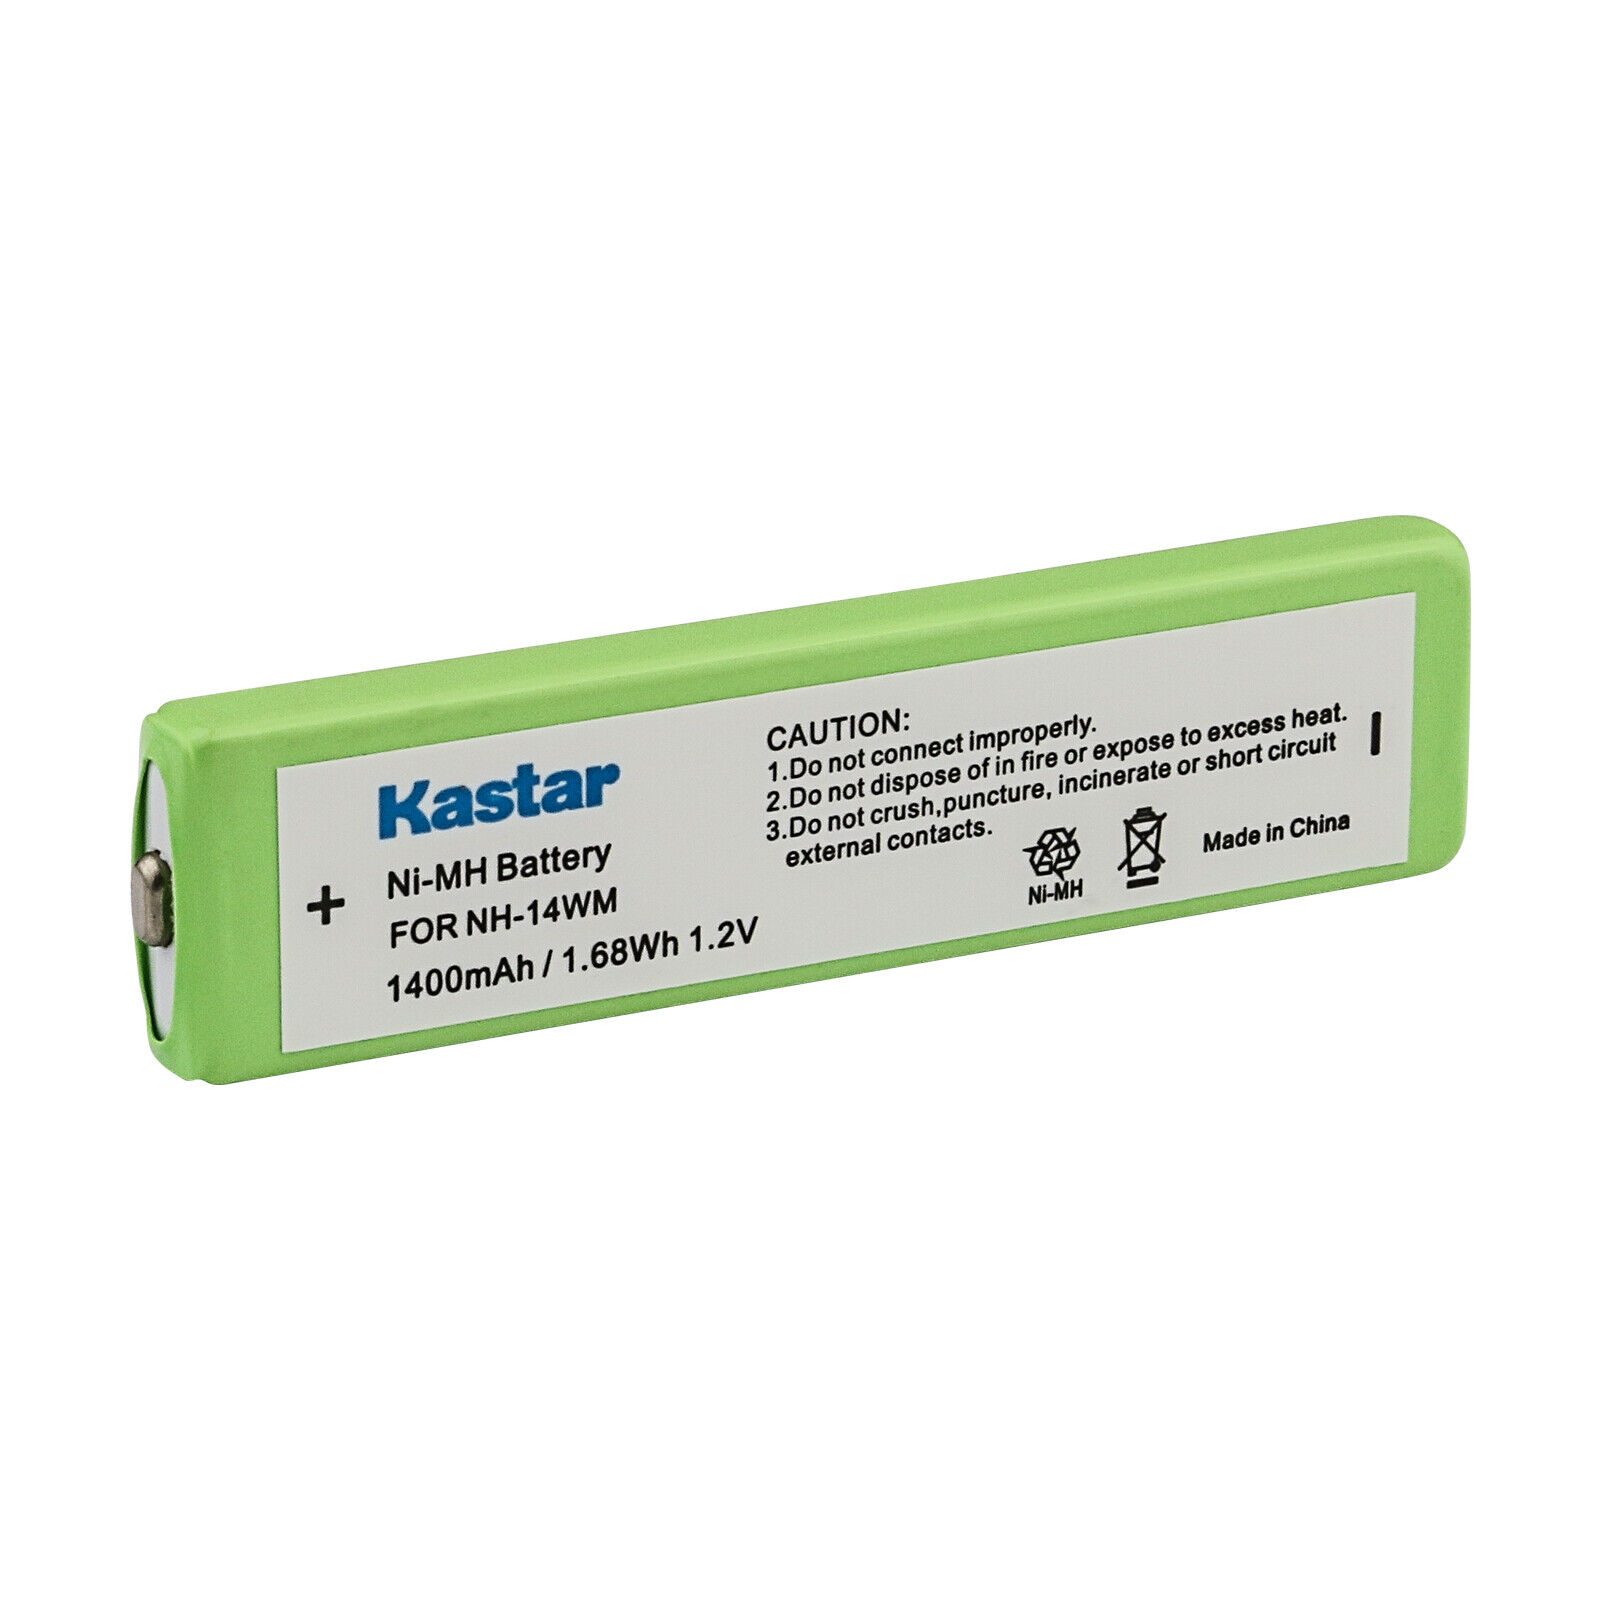 Kastar Gumstick Battery for Sony MZ-M10 MZ-M100 MZ-R900PC MZ-R900DPC CD/MD/MP3